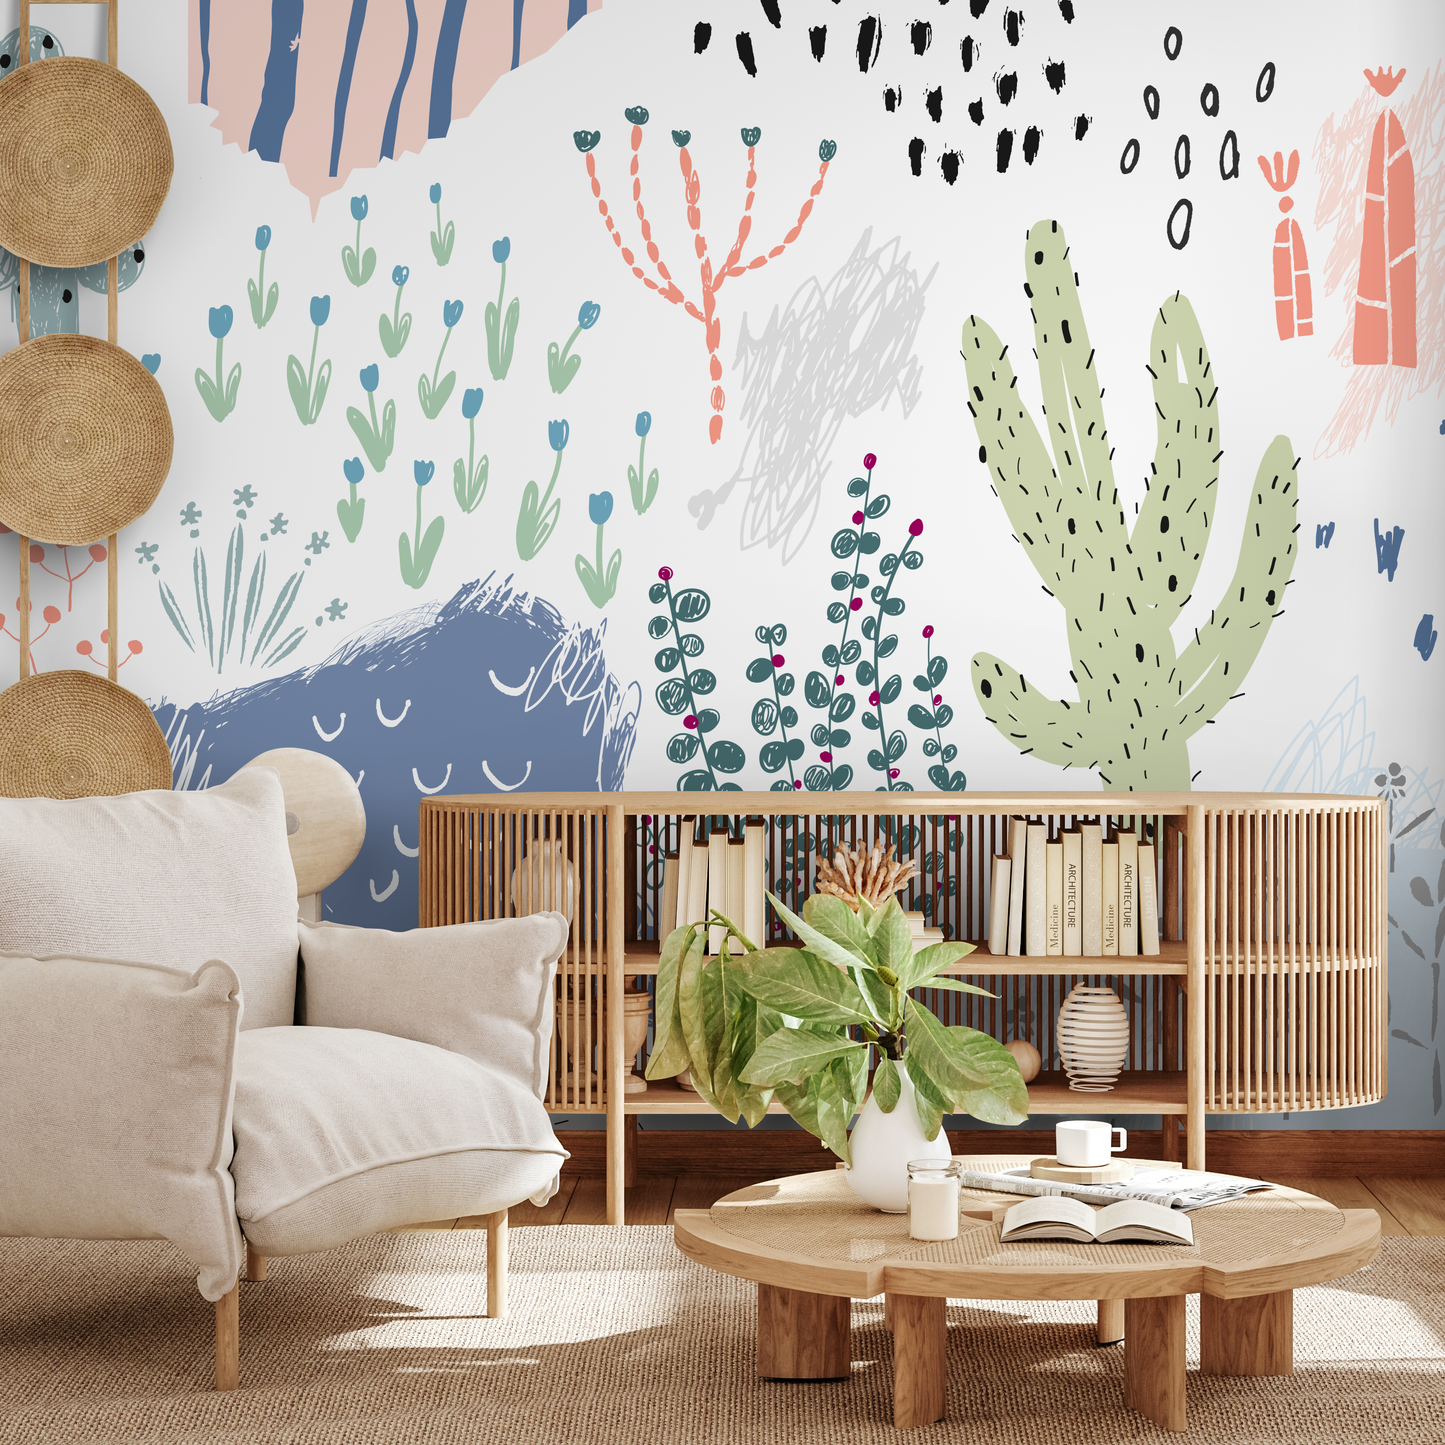 Cute Desert Wallpaper Nursery Wallpaper Fun Mural Peel and Stick and Traditional Wallpaper - A520